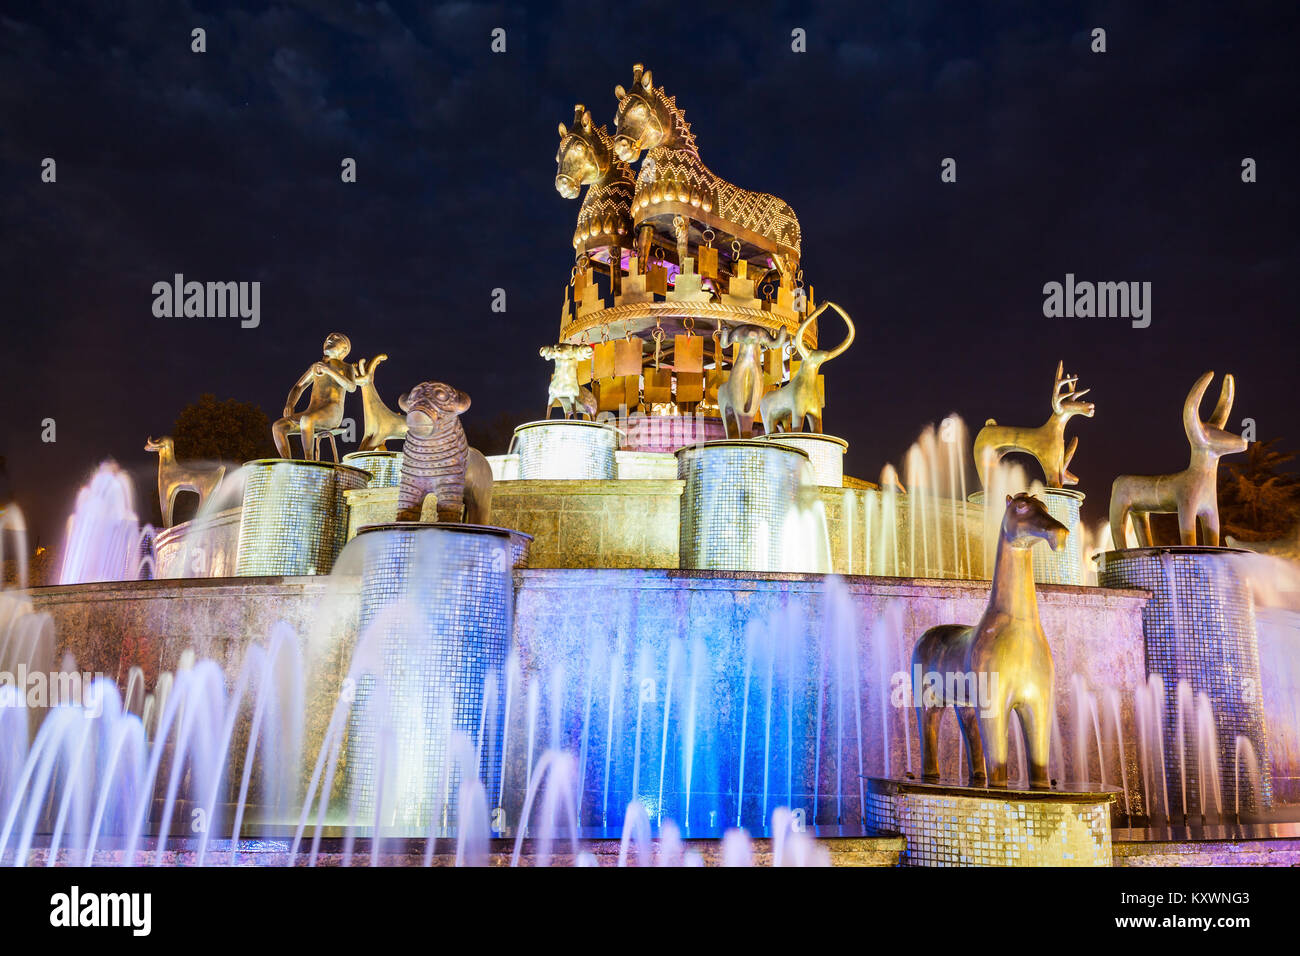 KUTAISI, GEORGIA - SEPTEMBER 25, 2015: Kolkhida Fountain at night in the center of Kutaisi, Georgia. Stock Photo